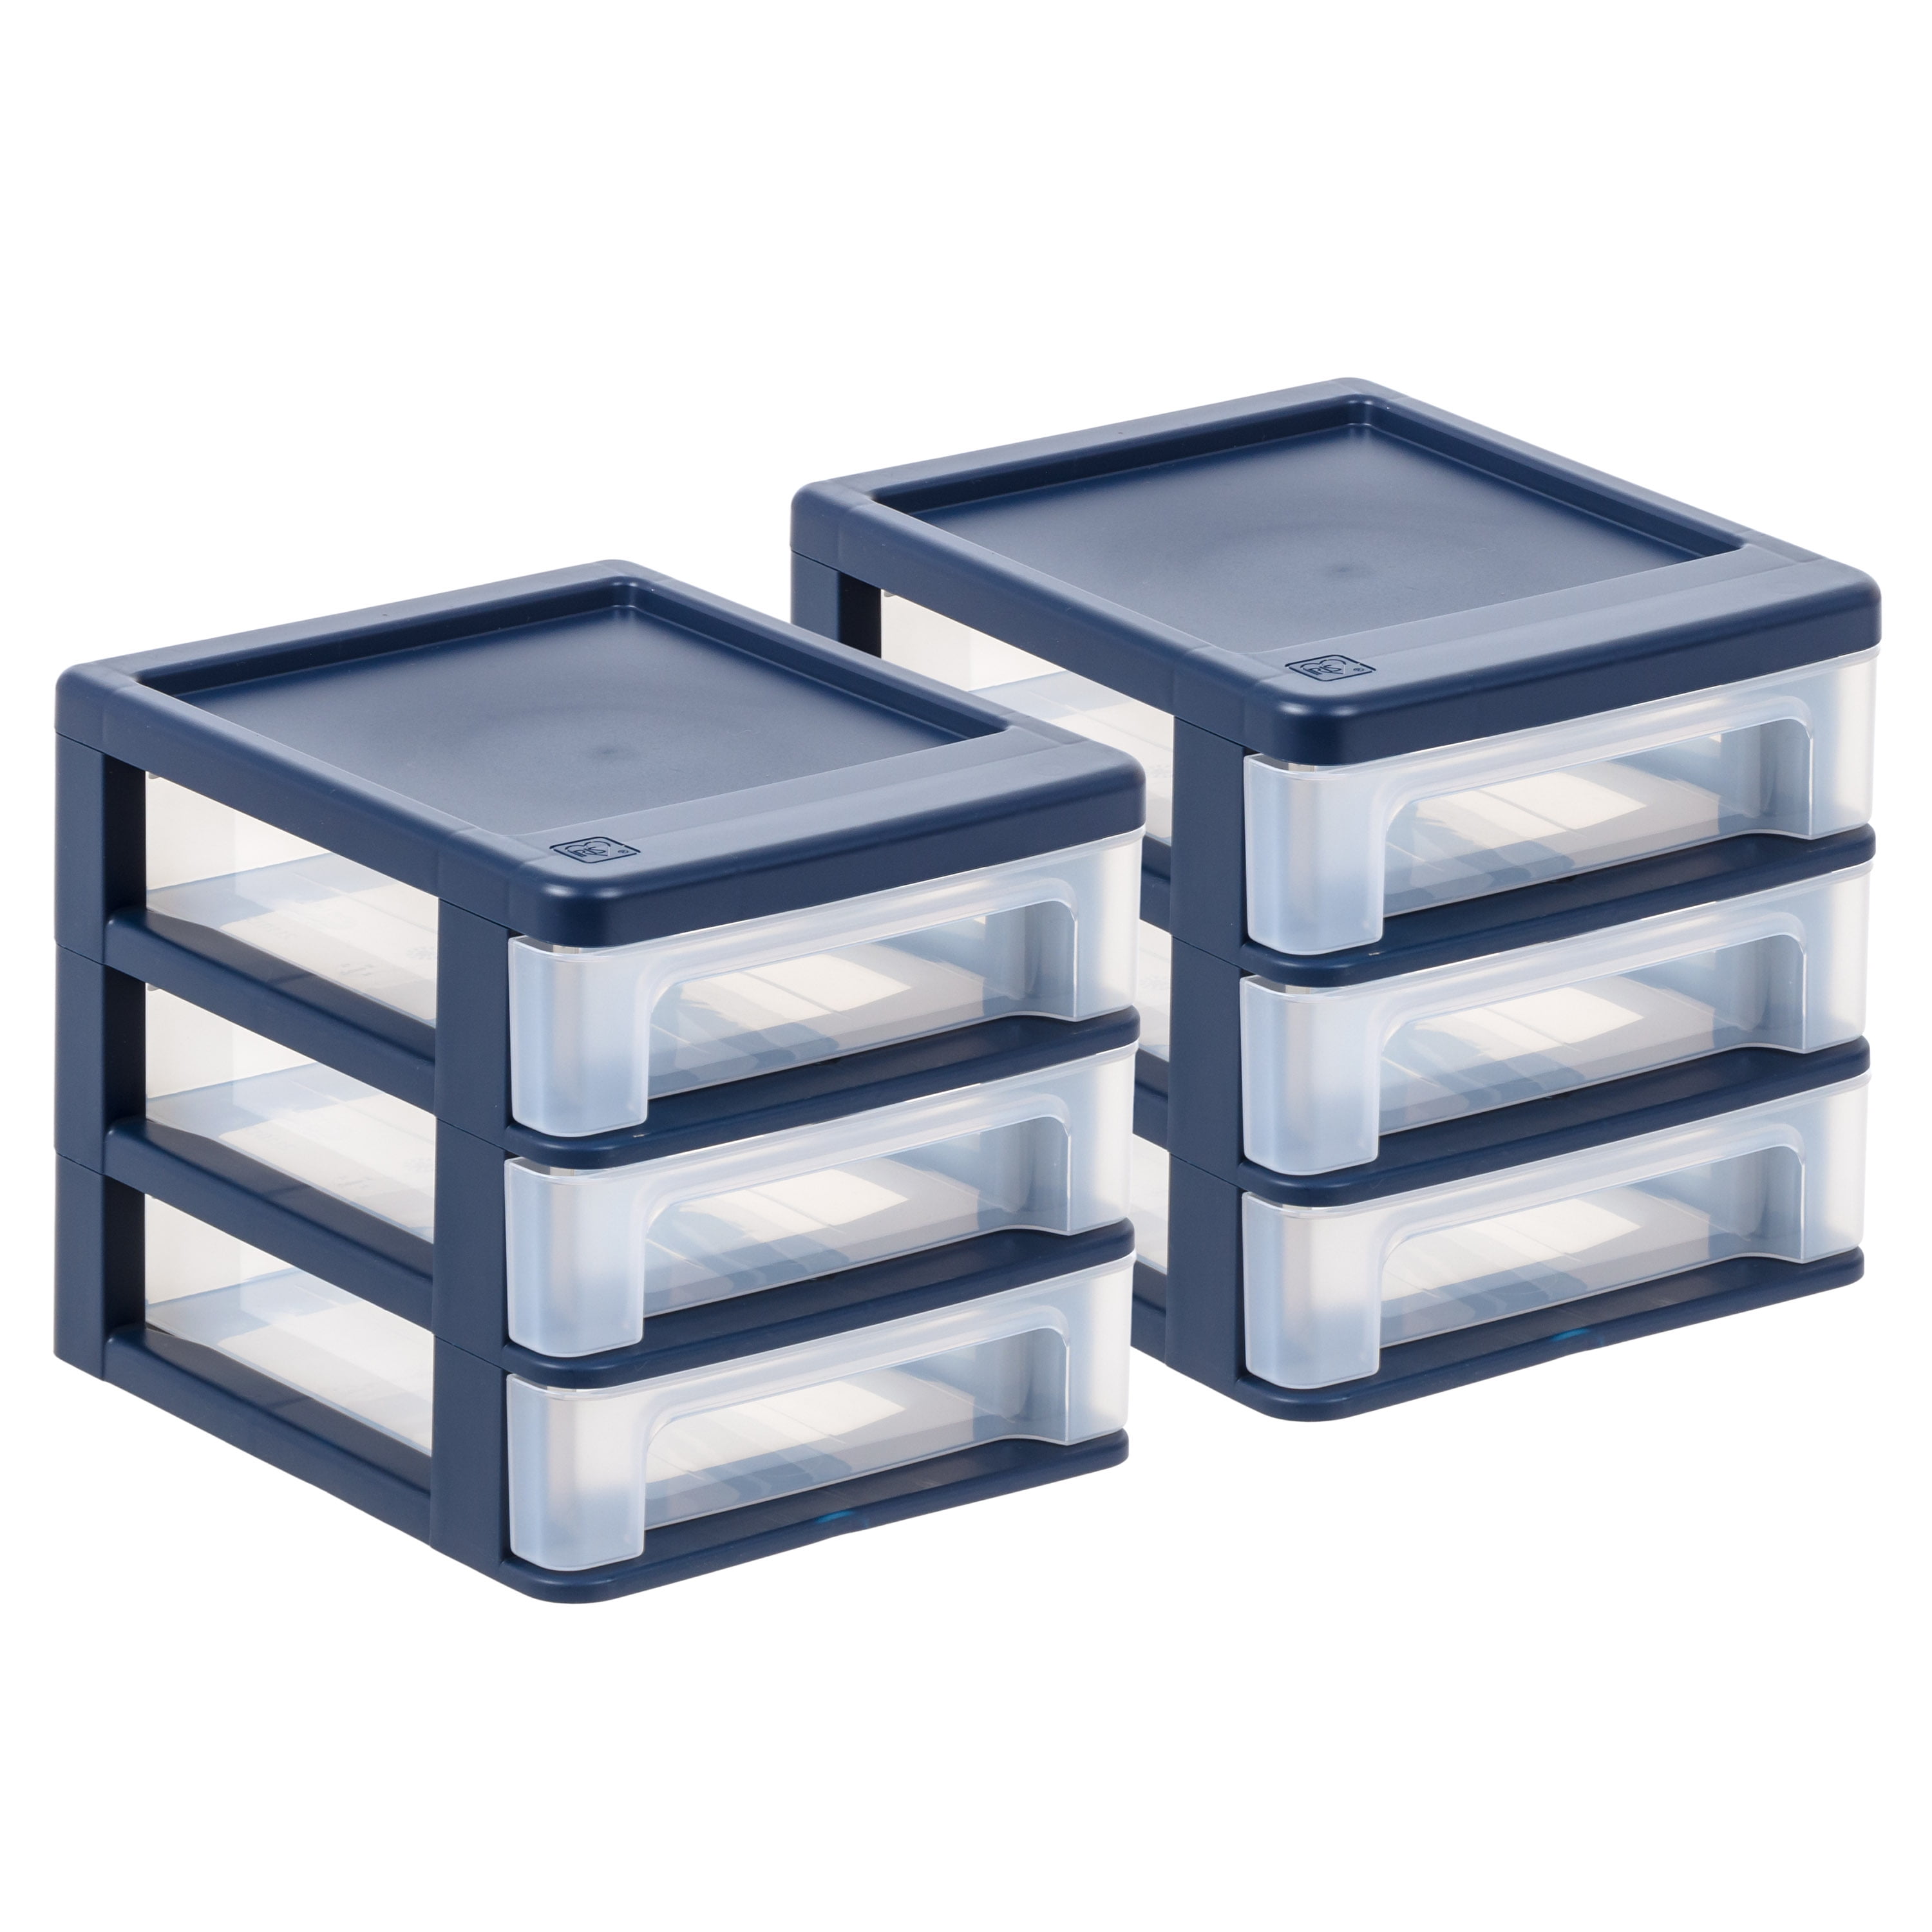  3 Drawer Plastic Storage - Plastic Storage Bins with